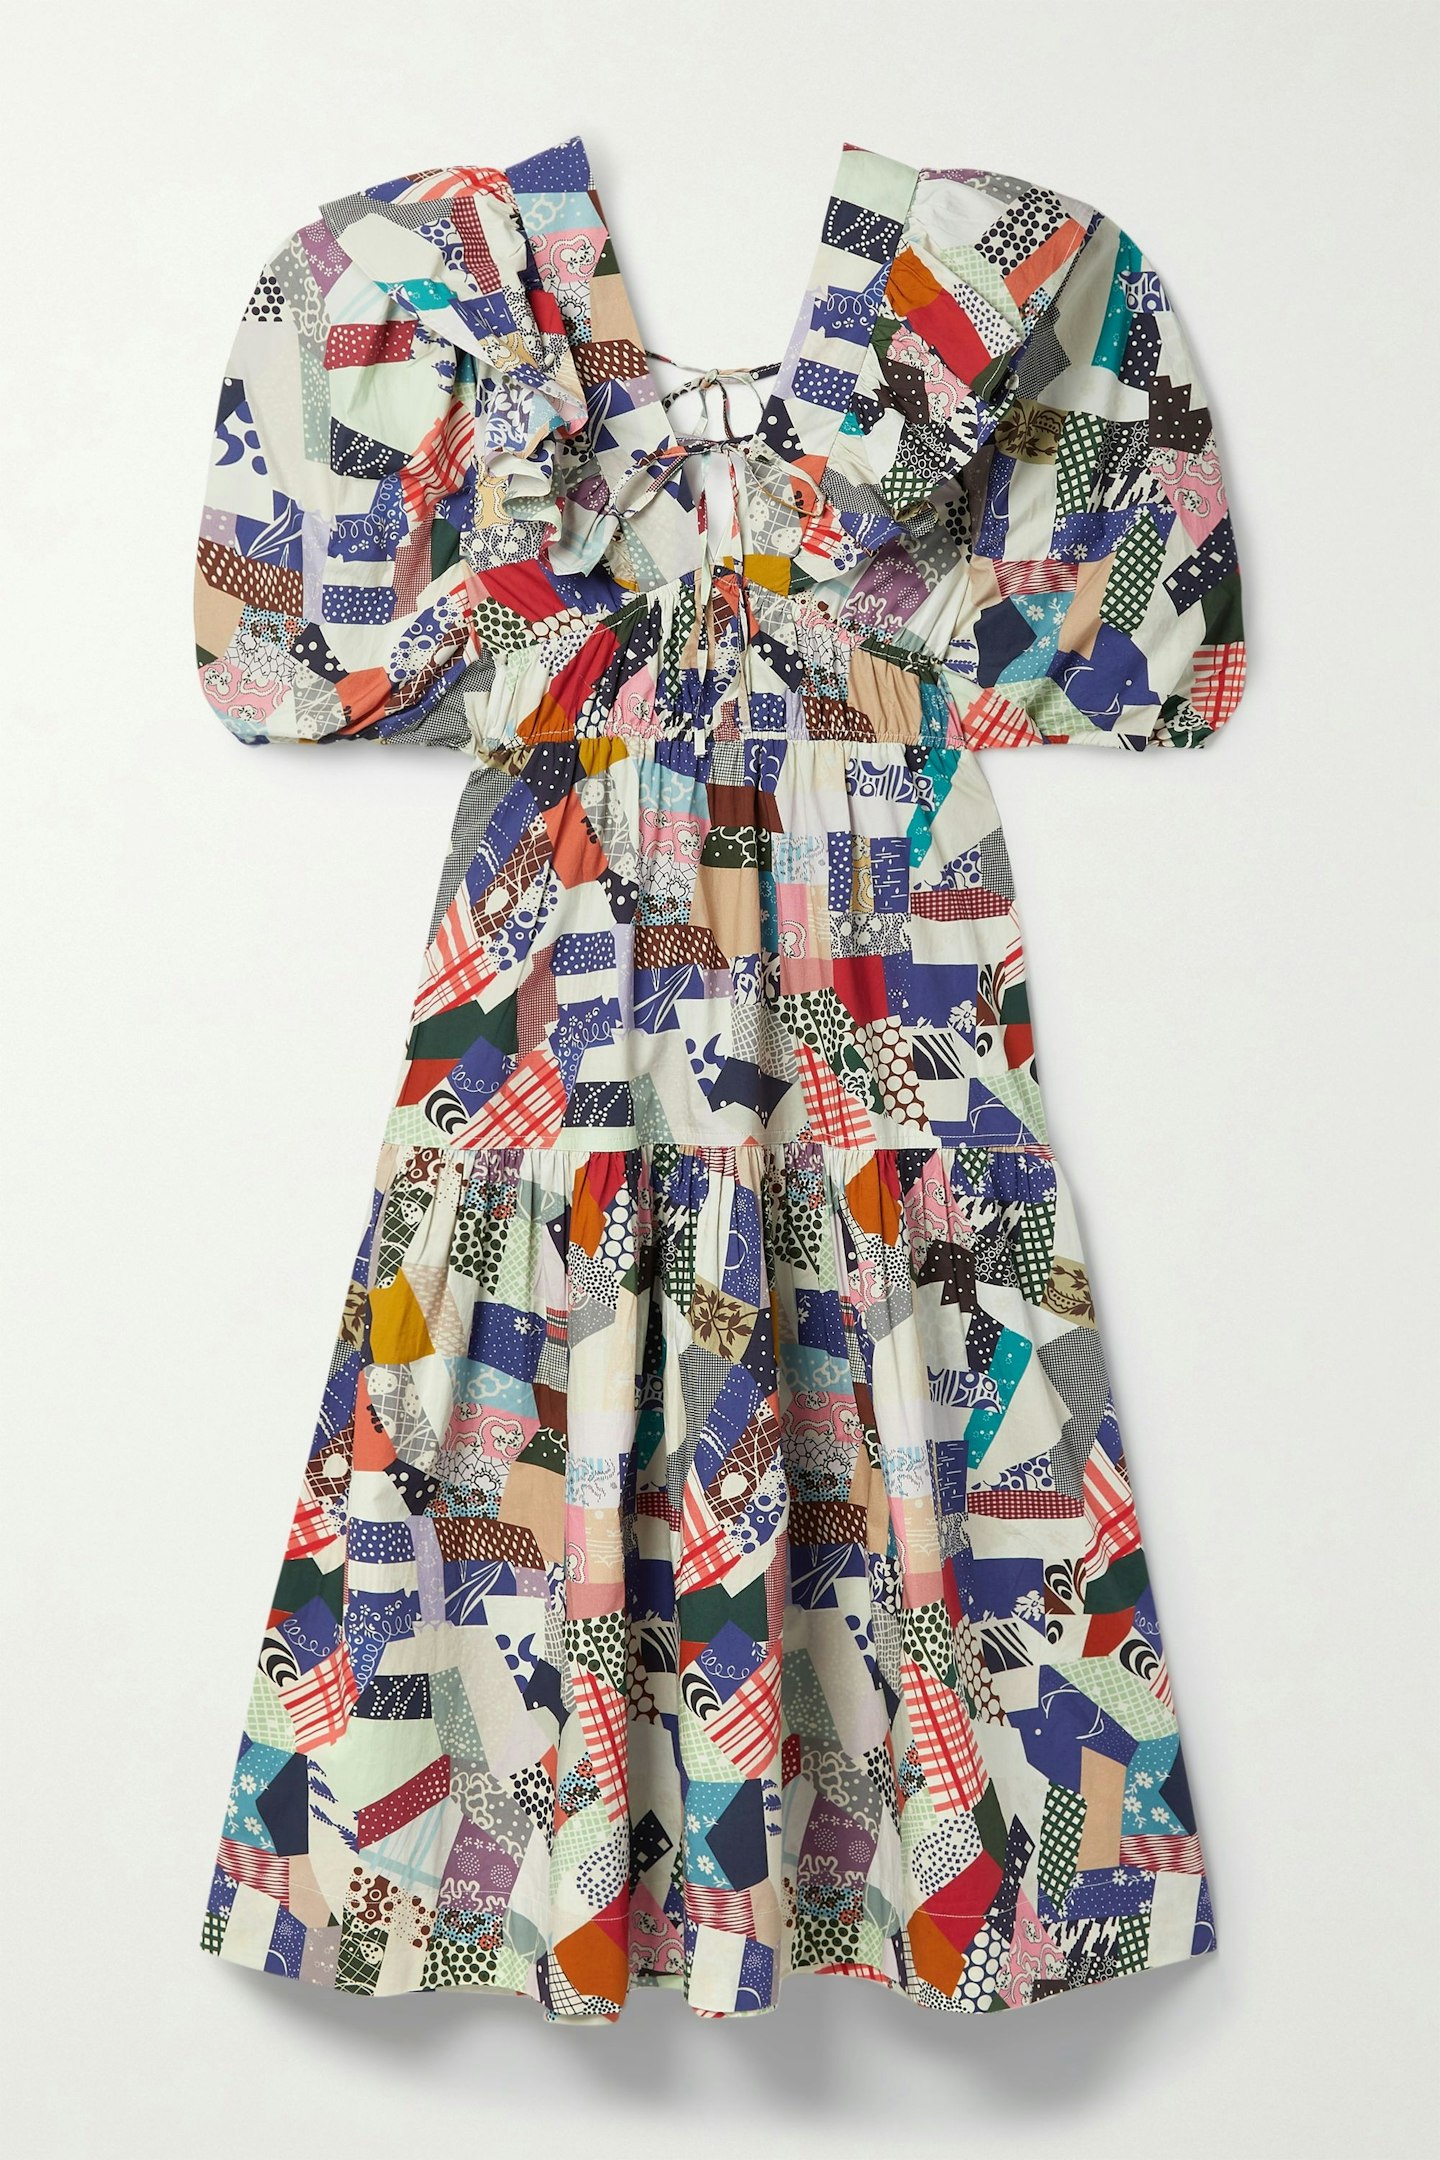 jubilee dresses SEA, Tiered Printed Cotton Poplin Midi Dress, £455